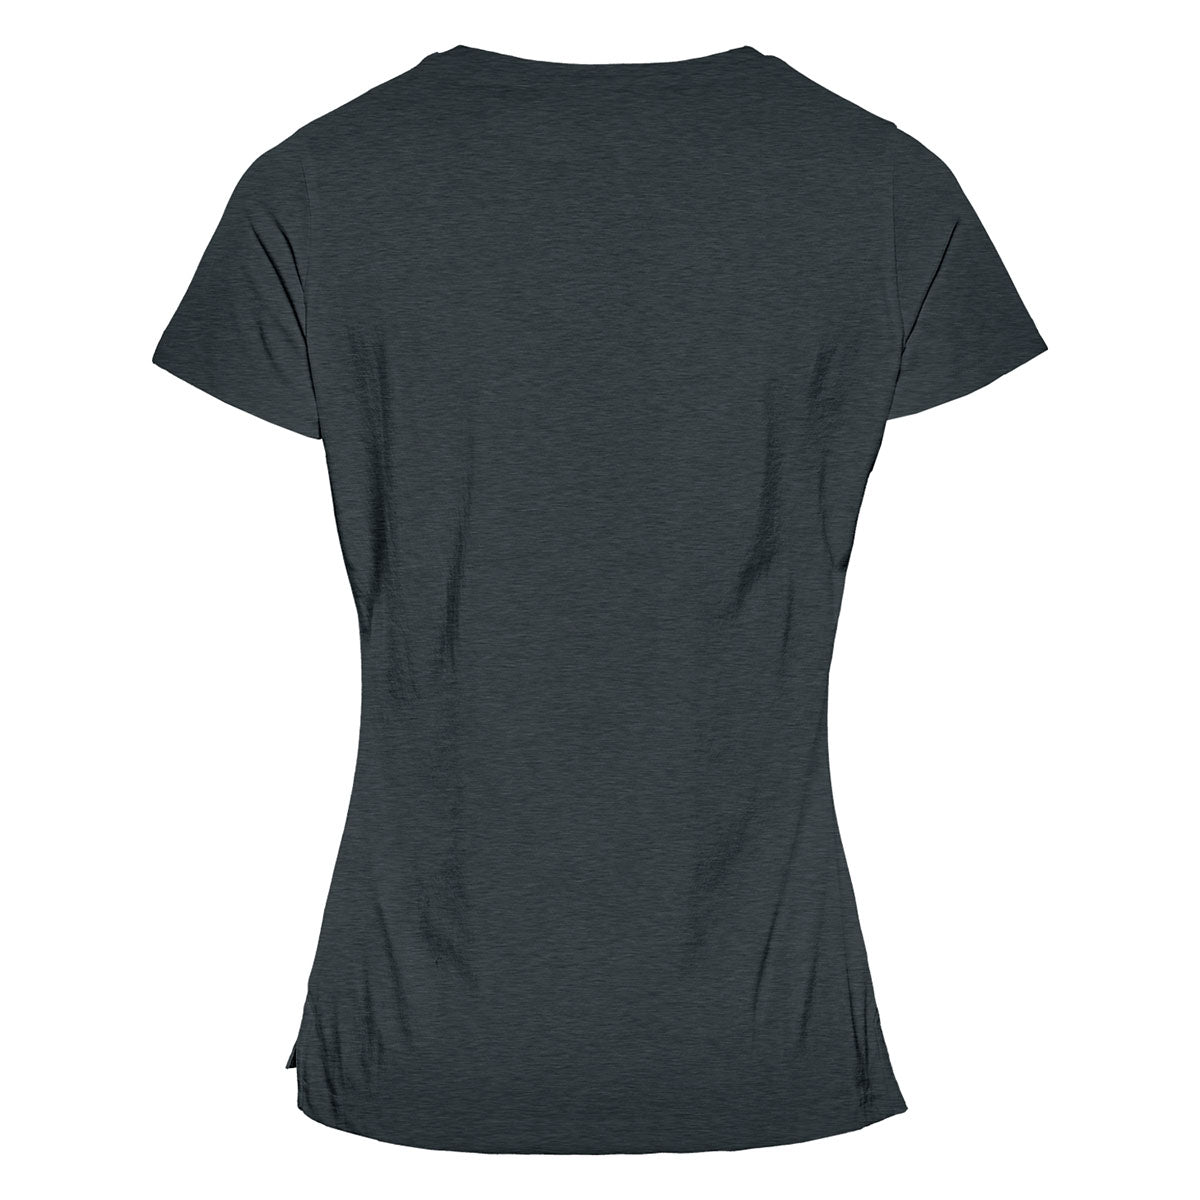 TSTH/MC/BASICA short sleeve thermal T-shirt